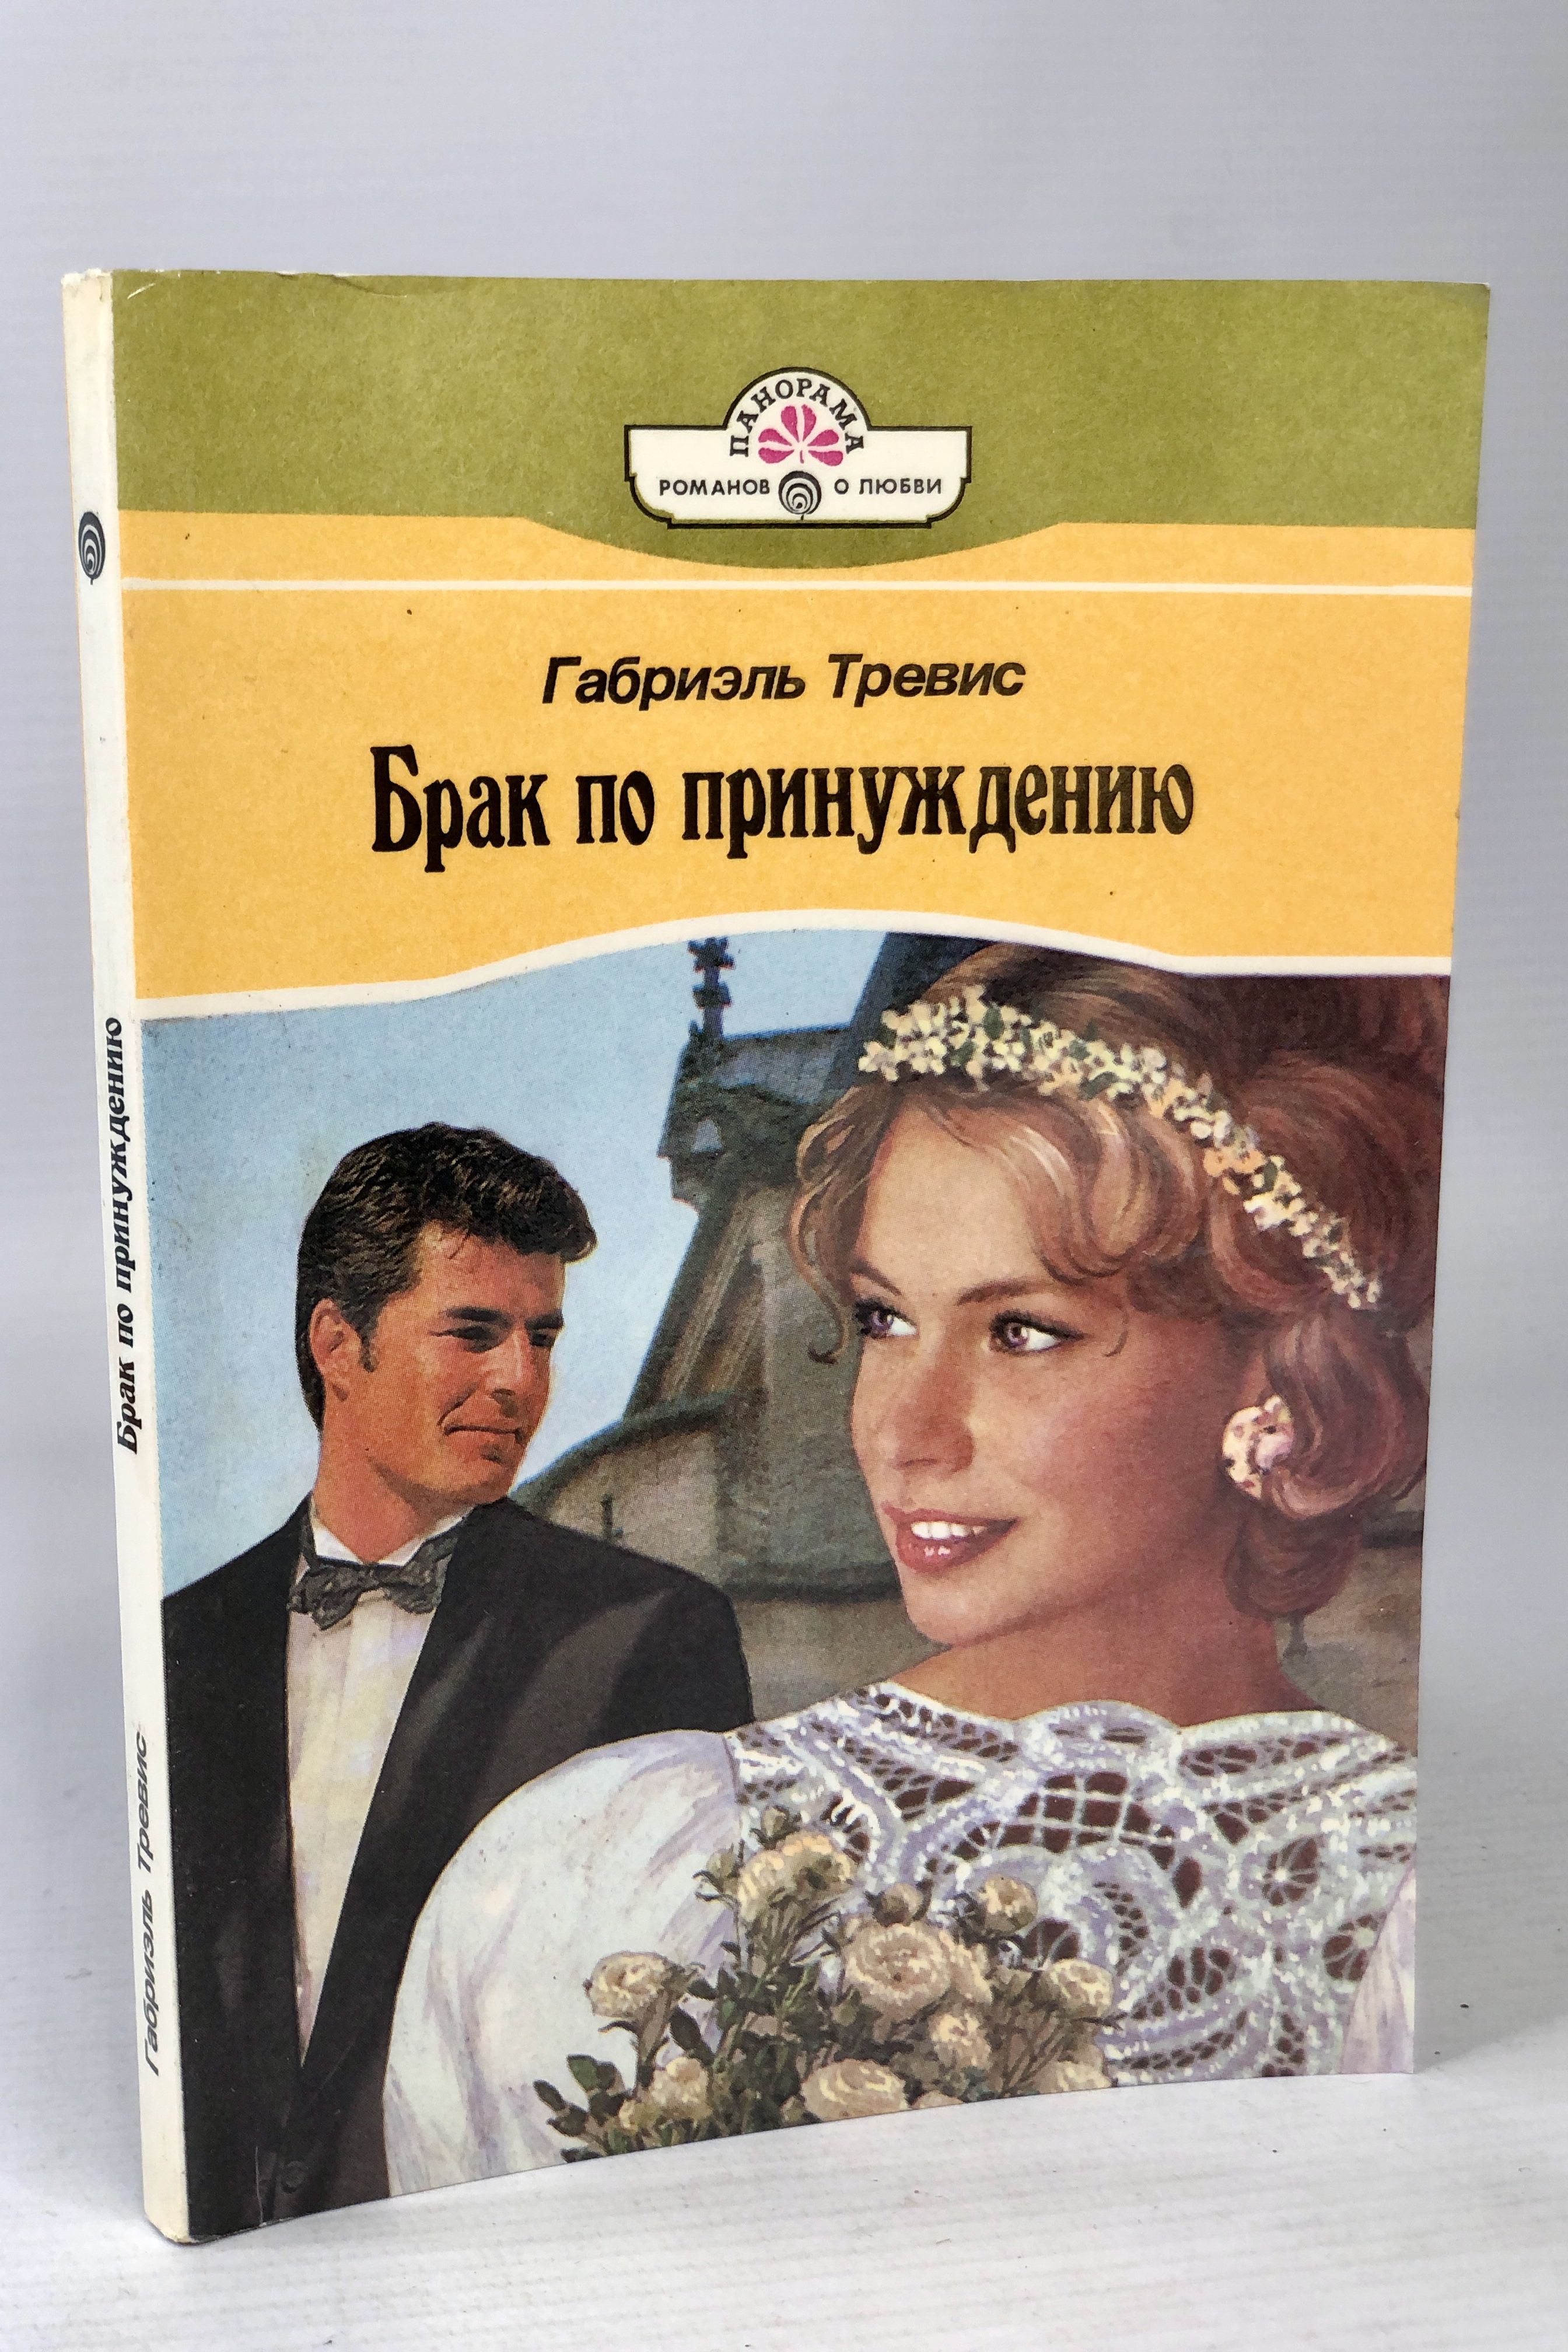 Замужество книги. Книга про брак. Книга про брак по принуждению популярная. Образцовое супружество книга.